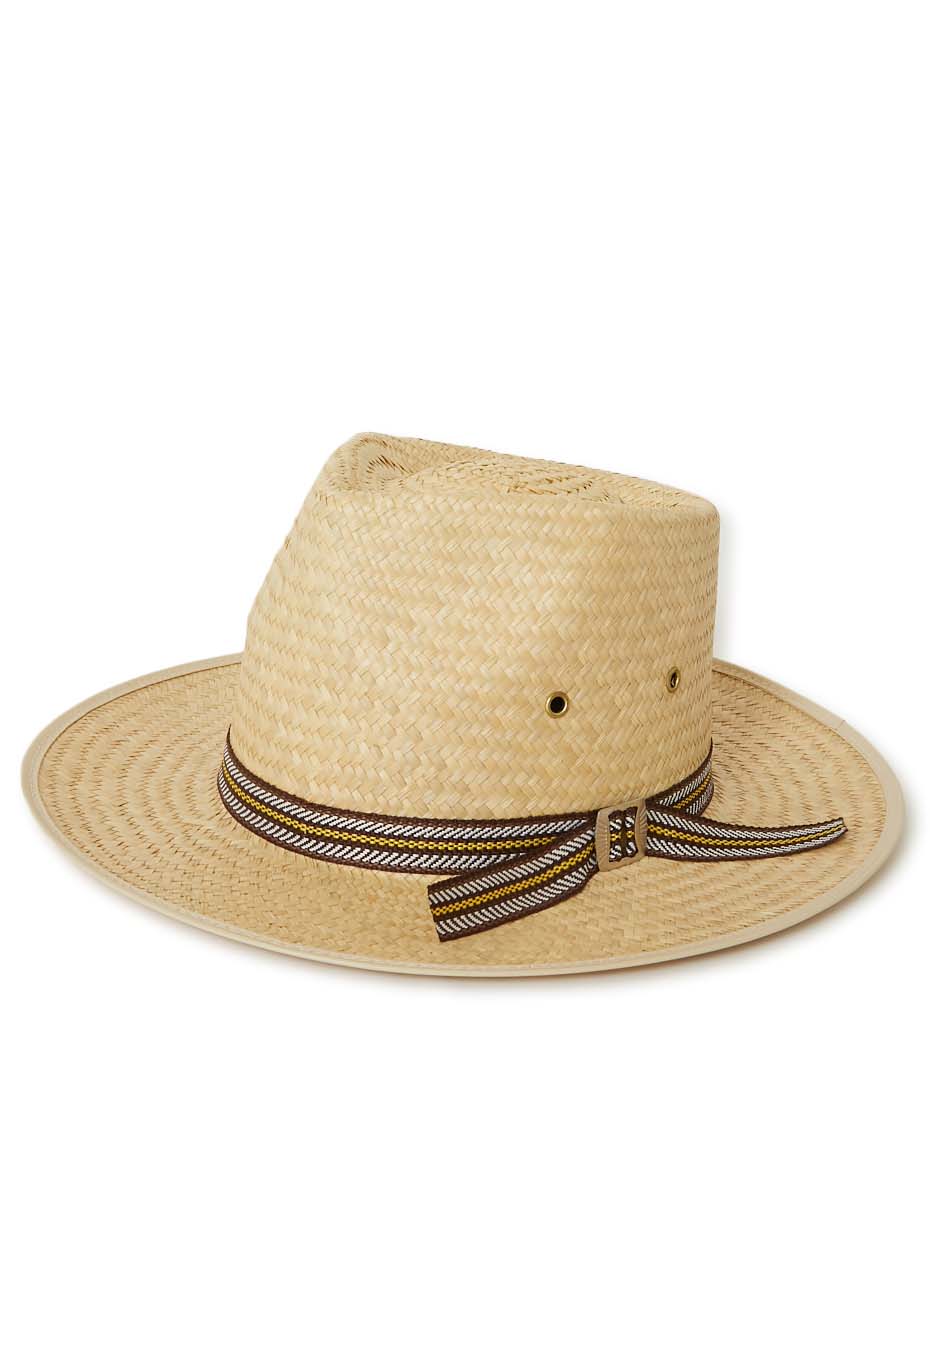 SUNSET STRAW HATS ピンチフロント3/4 Brown Hatband Palm Straw